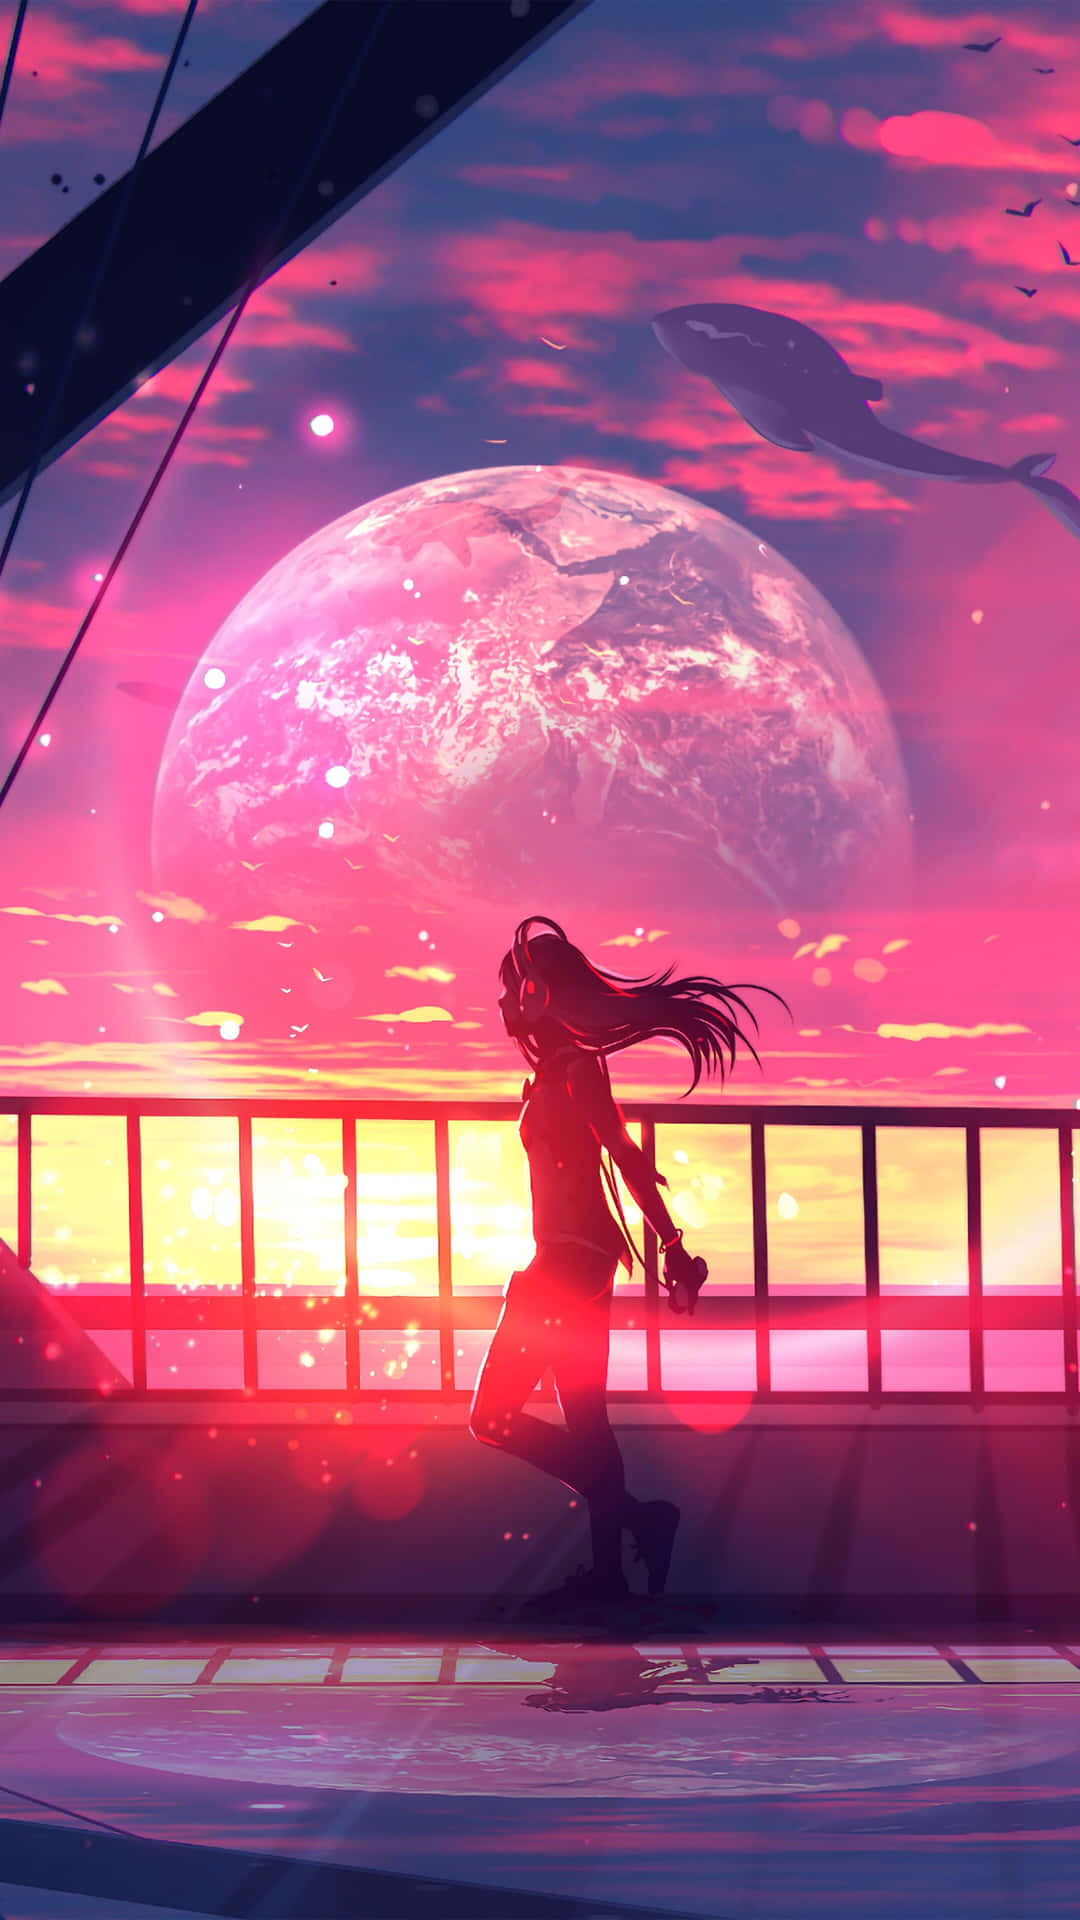 Free Anime Sunset Iphone Wallpaper Downloads, [100+] Anime Sunset Iphone  Wallpapers for FREE 